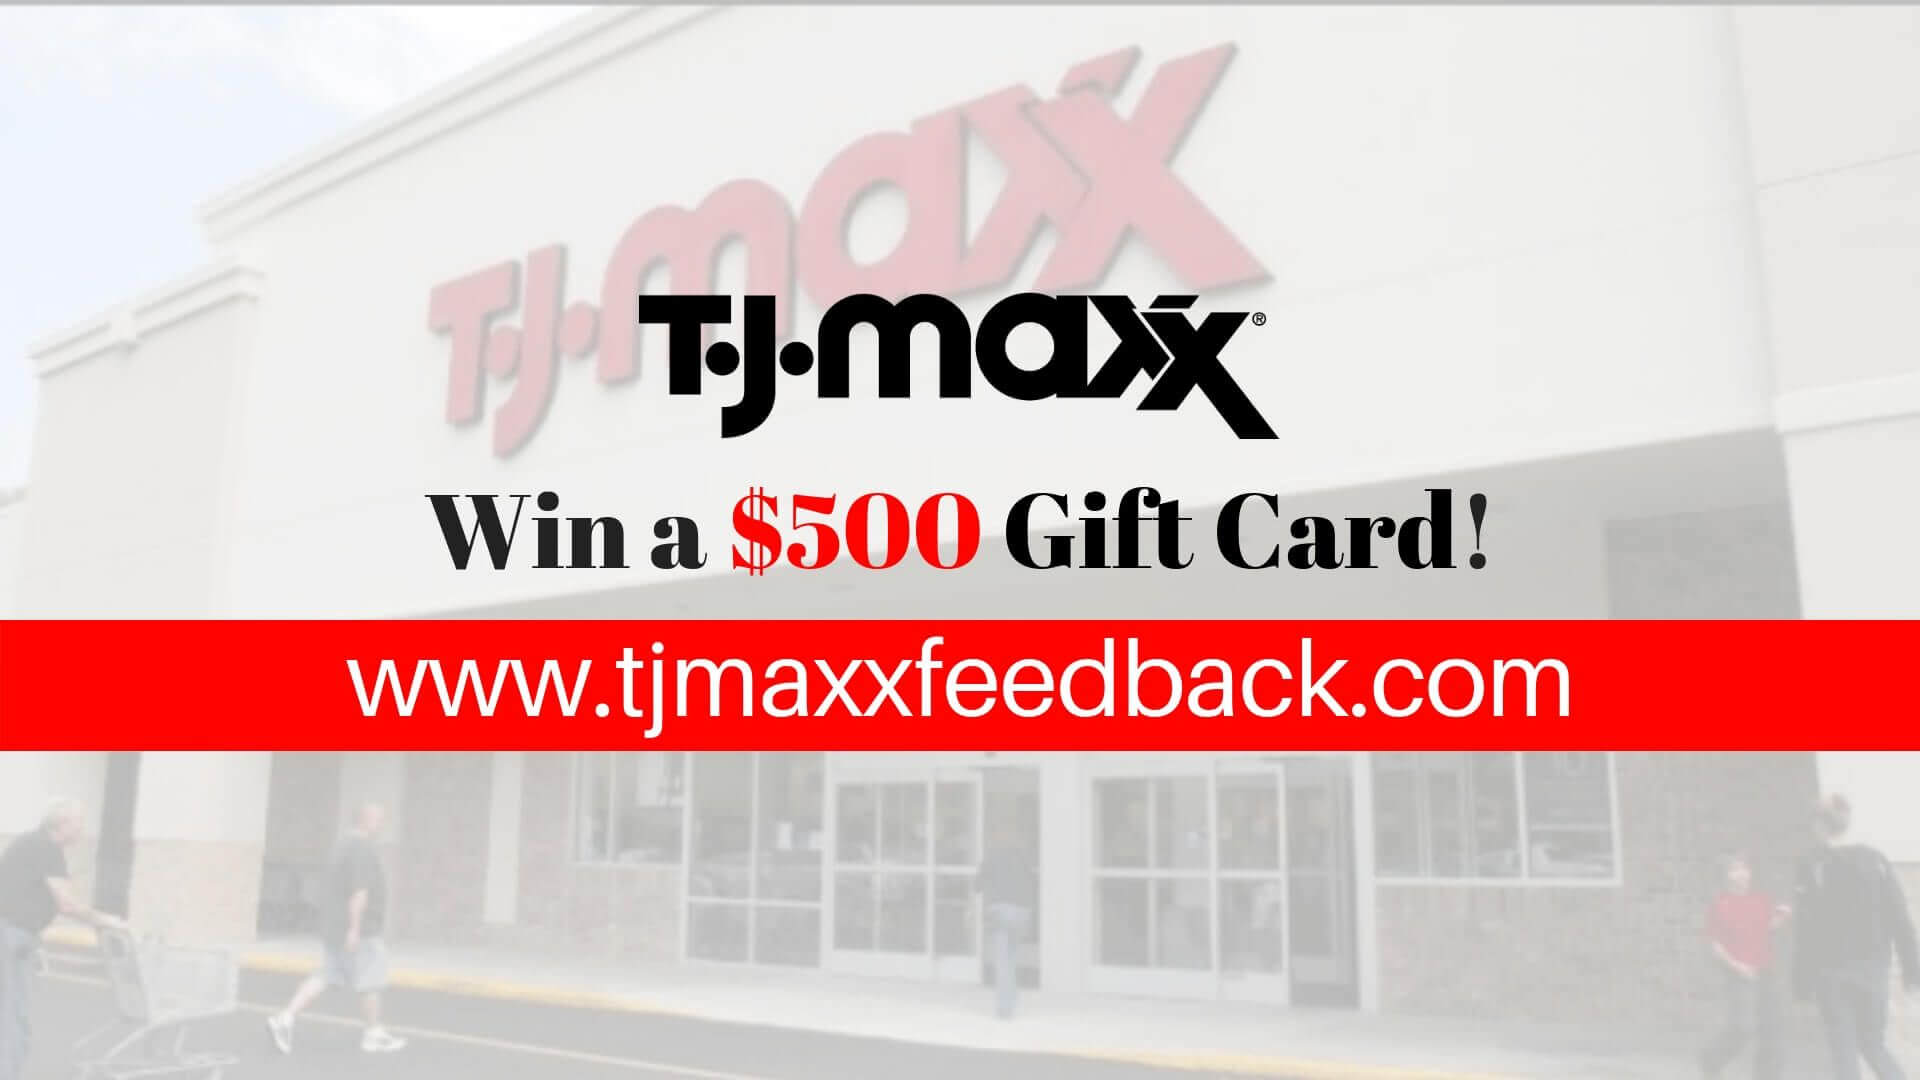 GUIDE on www.tjmaxxfeedback.com Survey to Get $500 Gift Card